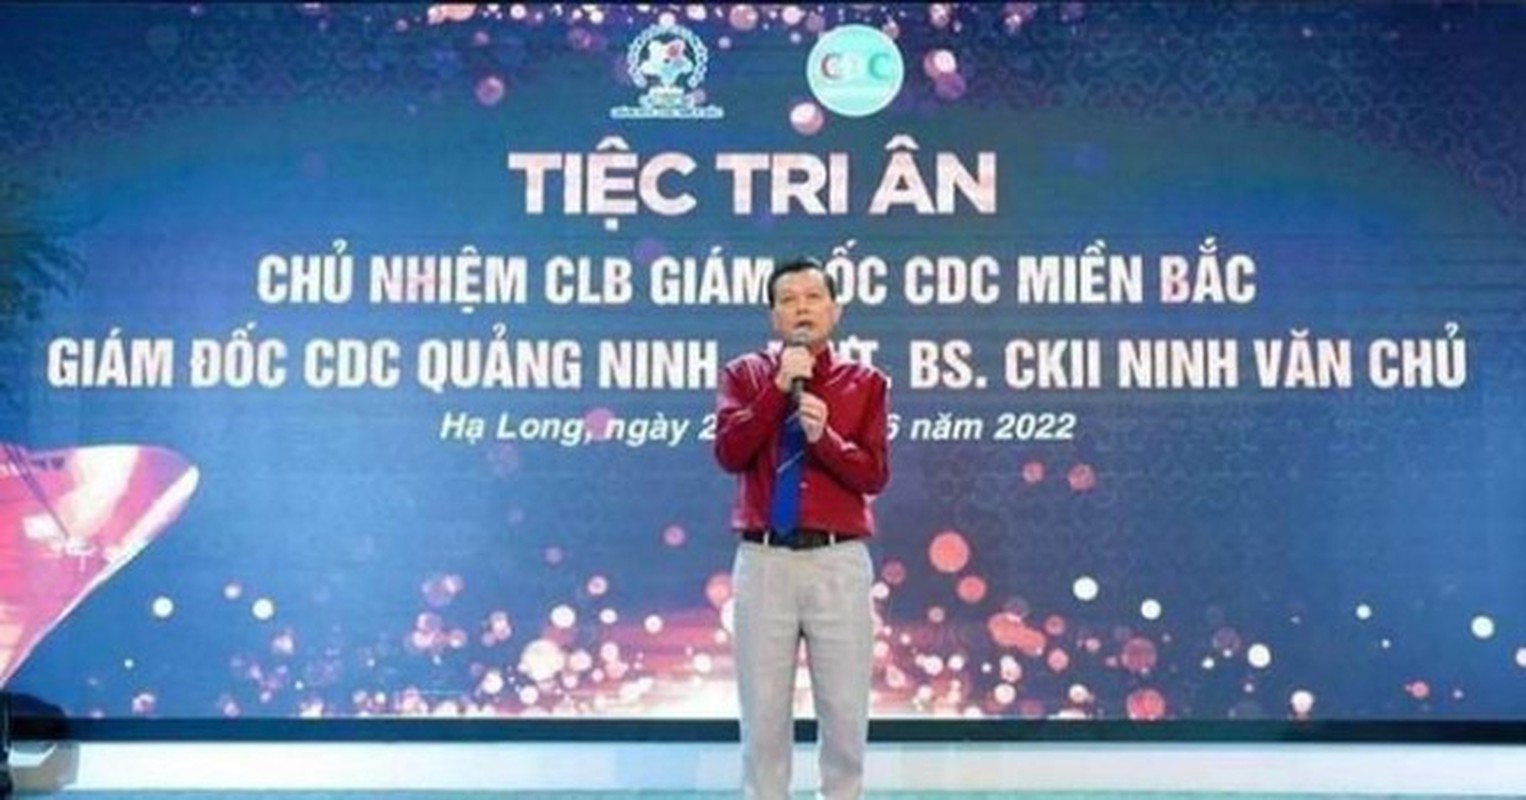 Tu “bua tiec chia tay” den ky luat nguyen Giam doc CDC Quang Ninh